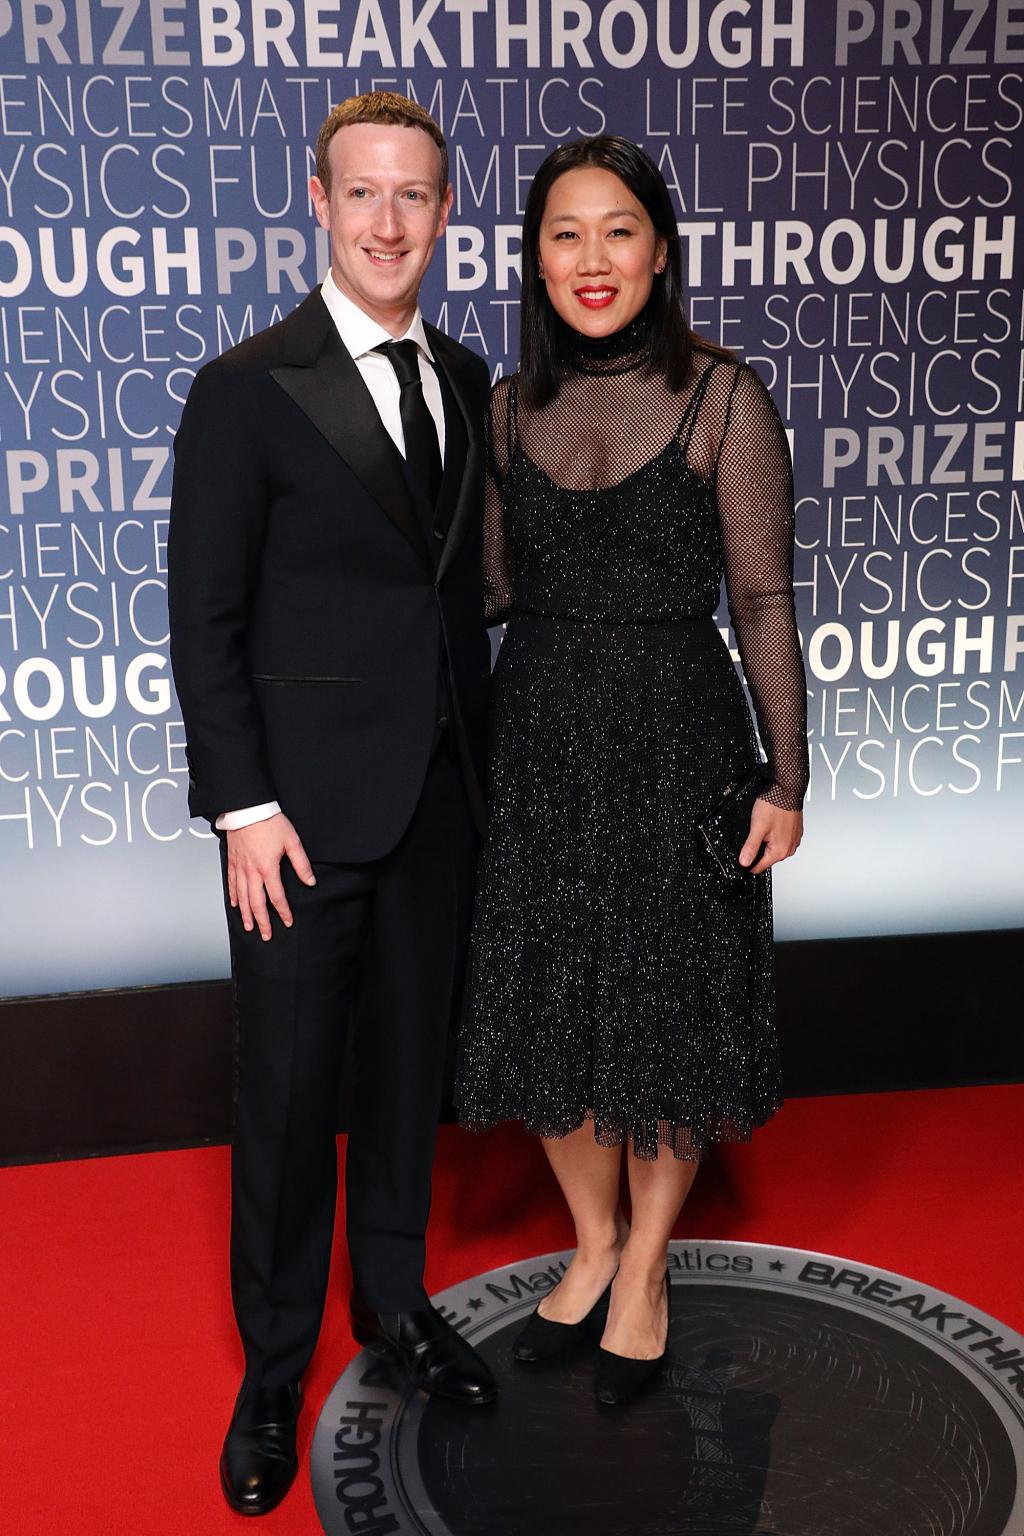 Mark Zuckerberg and wife, Priscilla Chan expecting third child